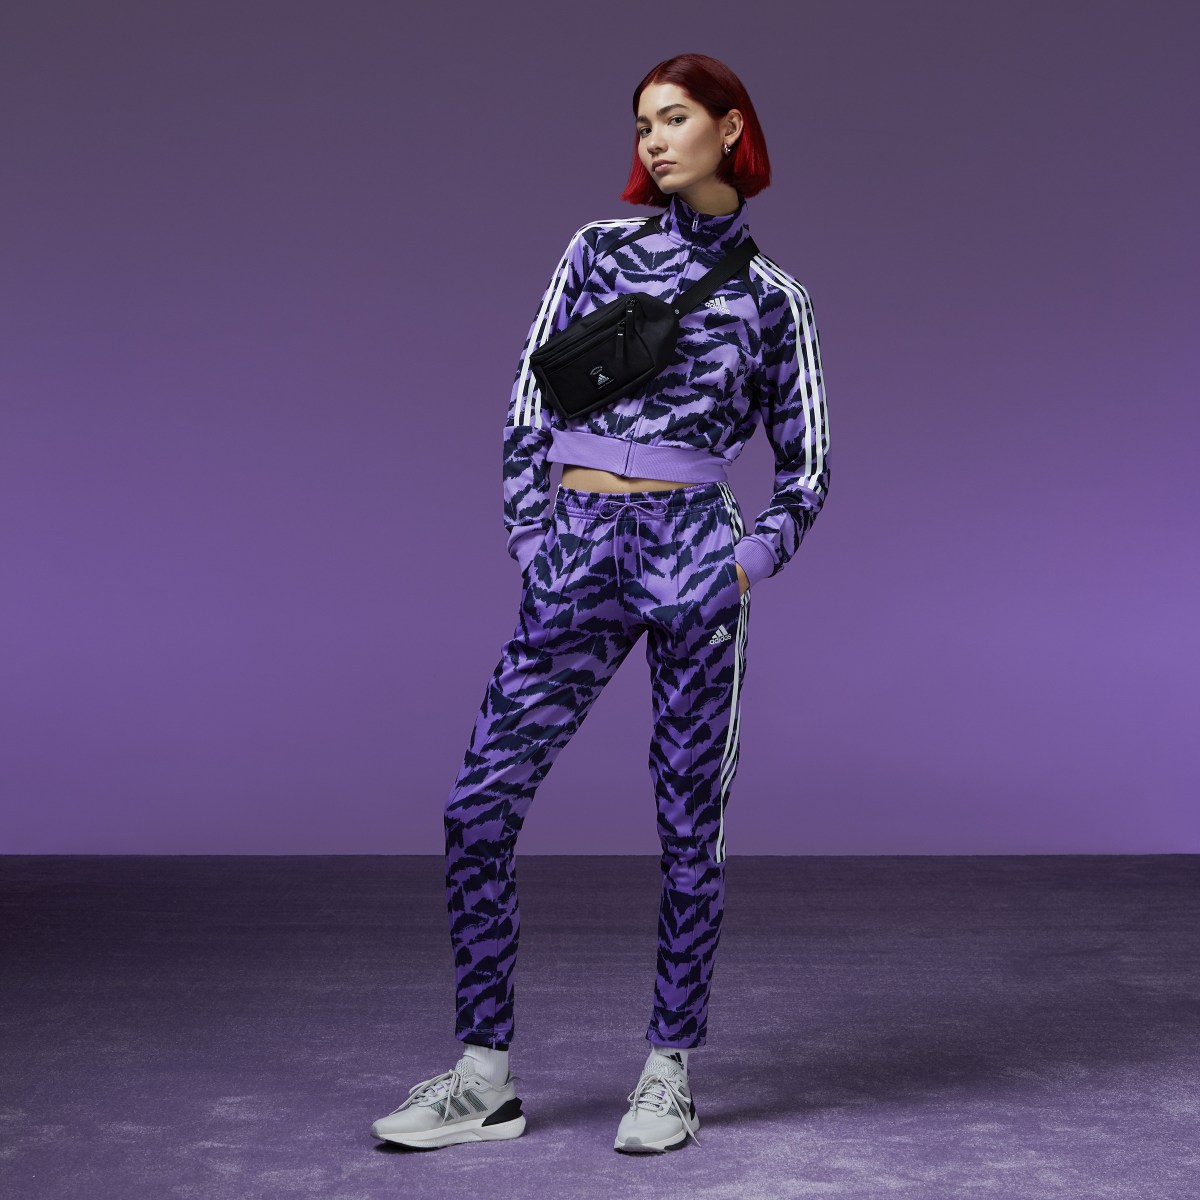 Adidas Tiro Suit Up Lifestyle Track Top. 10